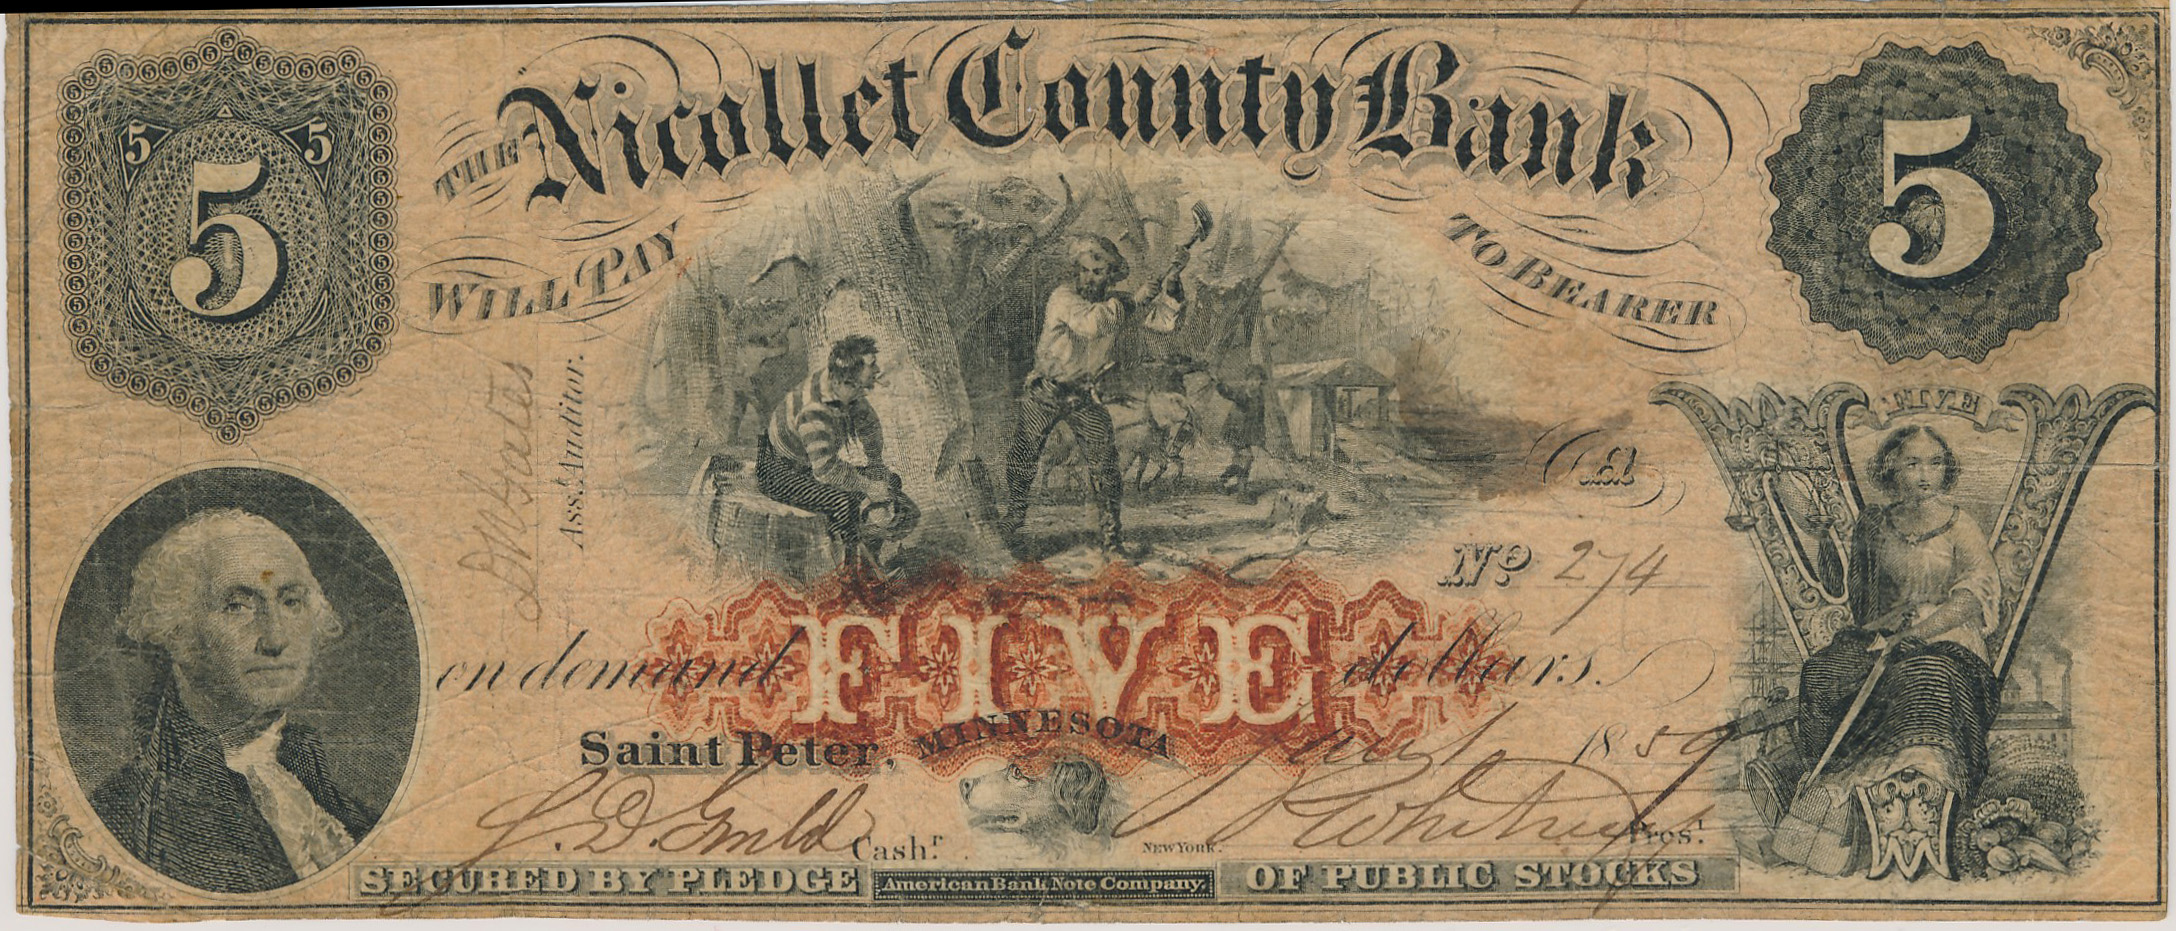 $5 Nicollet County Bank